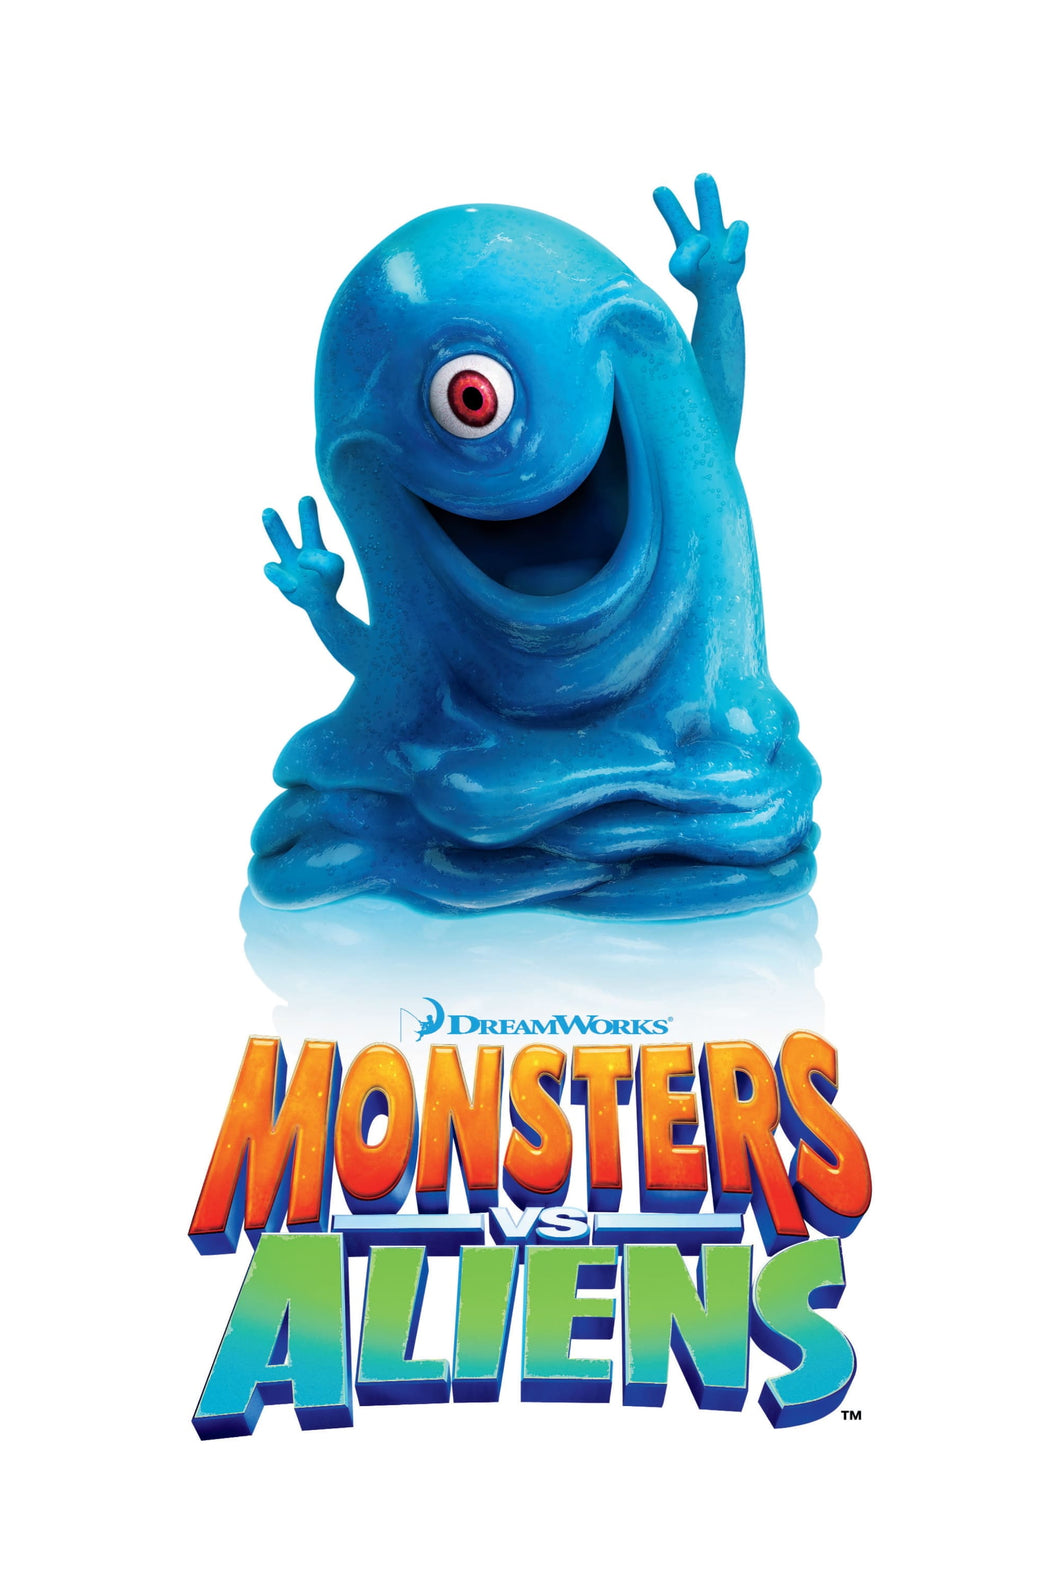 Monsters vs Aliens (2009) Animated Movie Poster Framed or Unframed Glossy Poster Free UK Shipping!!!